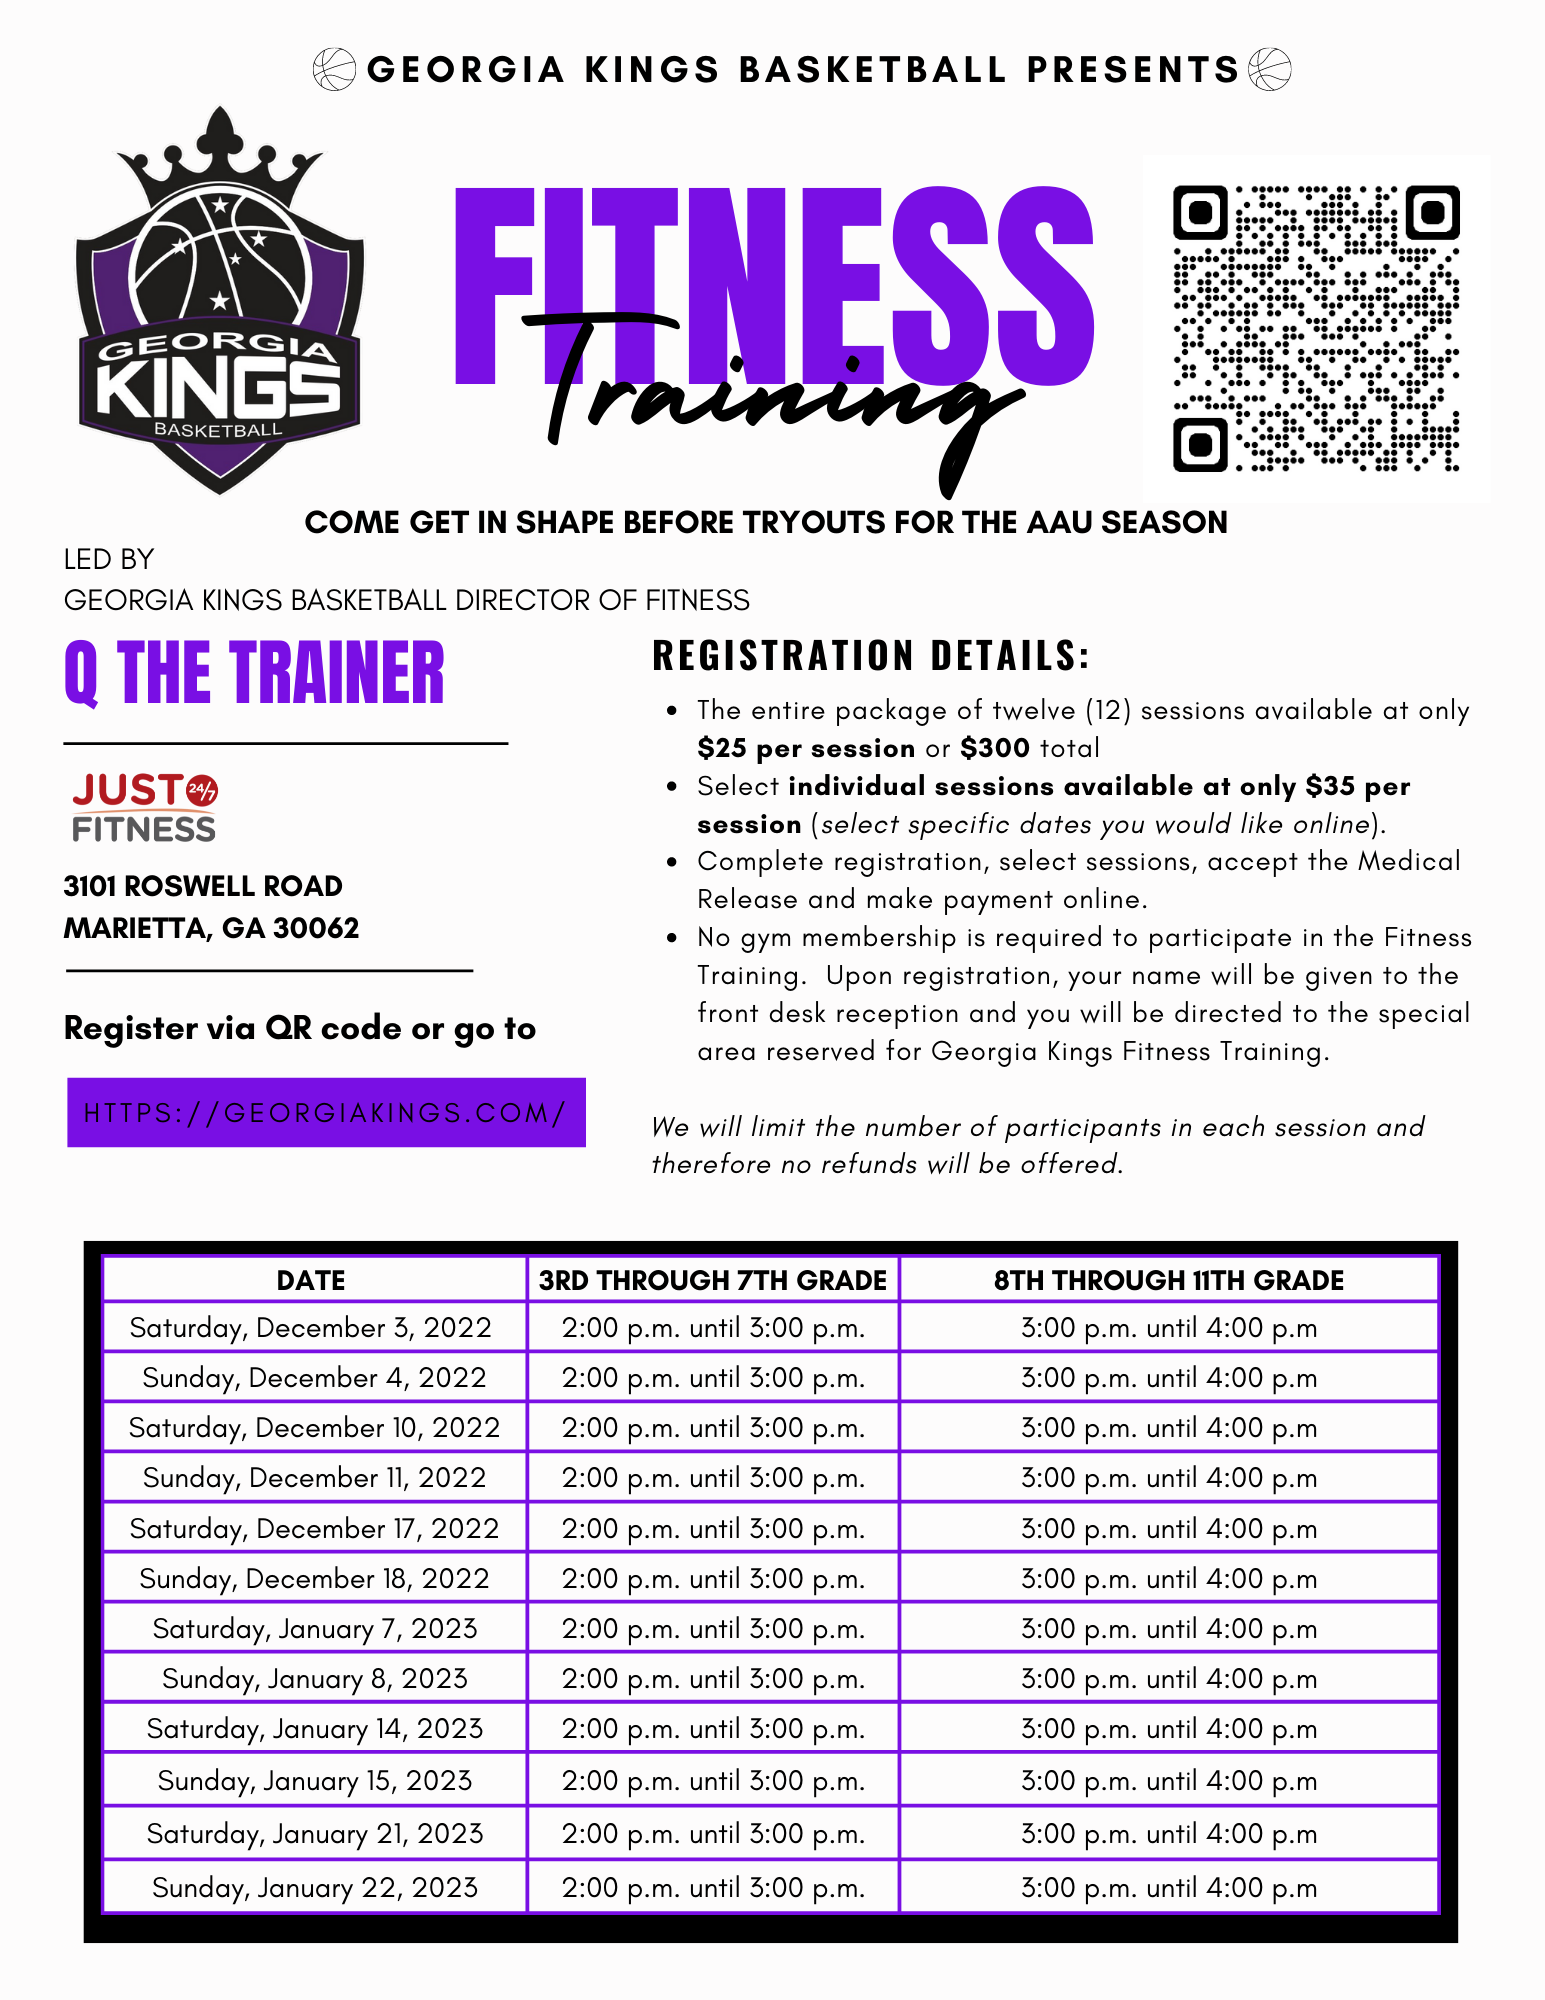 Fitness Training 2022-23